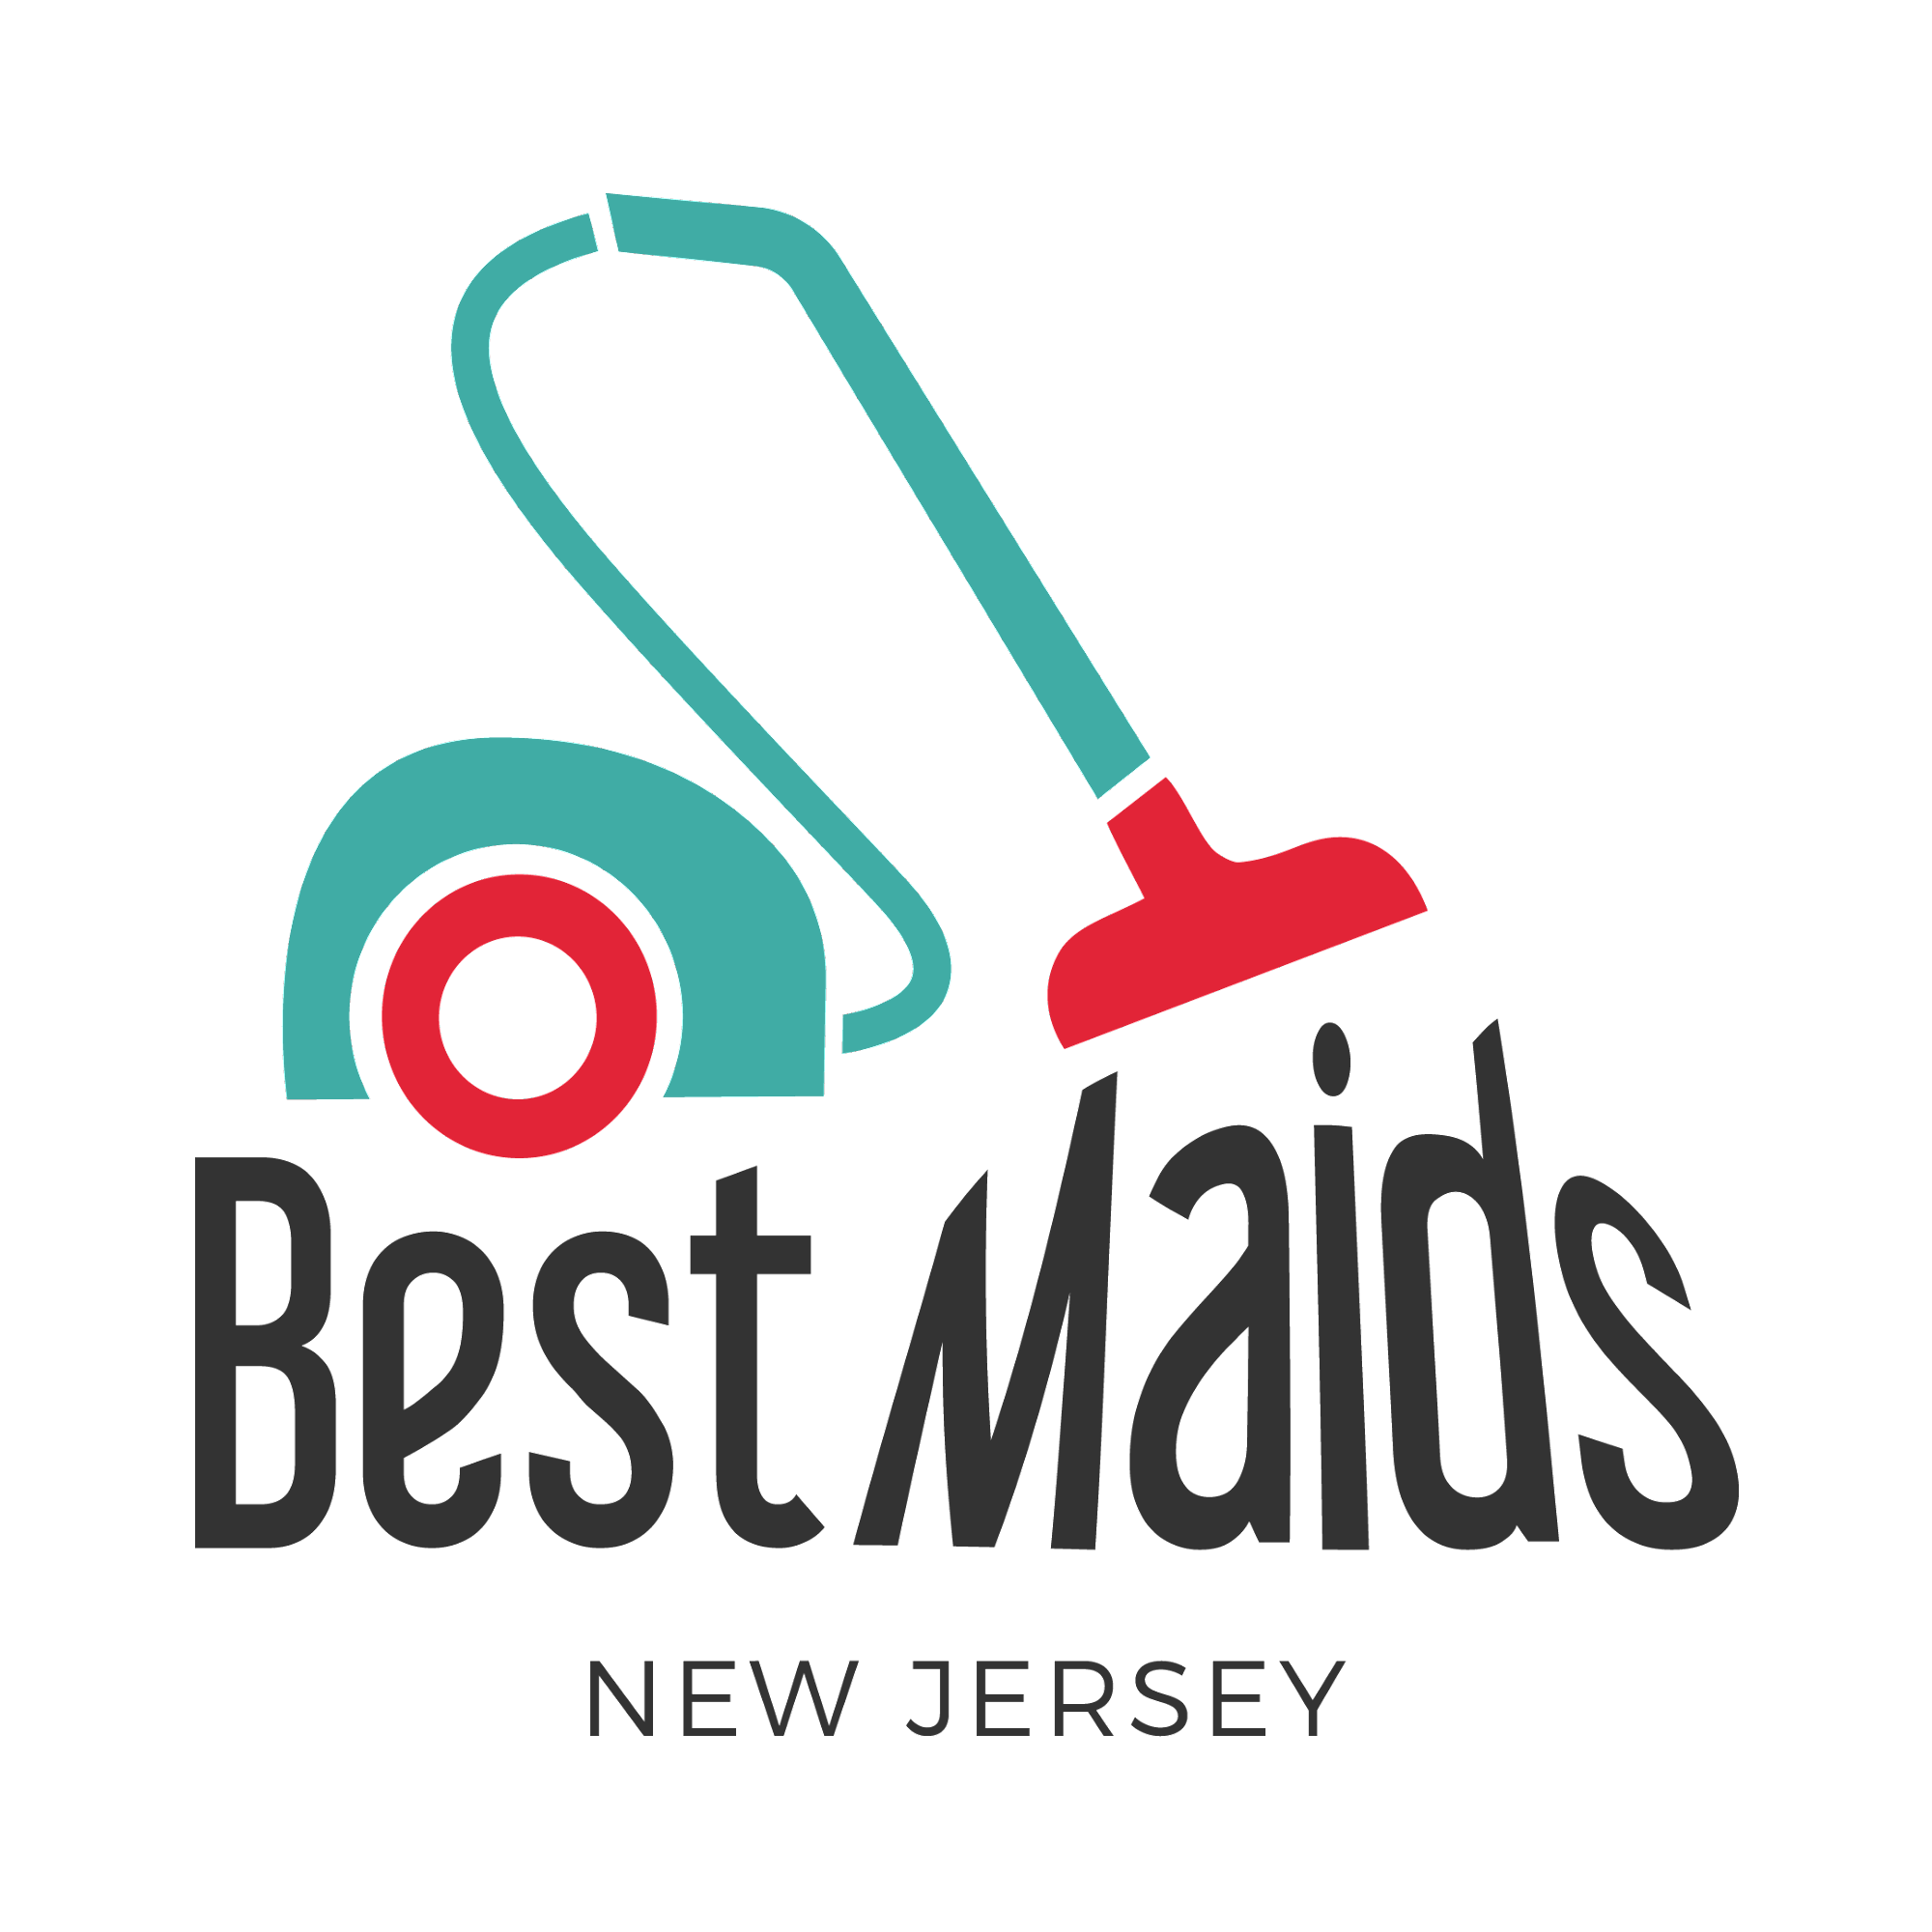 Best Maids NJ 516 Bloy St, Hillside New Jersey 07205